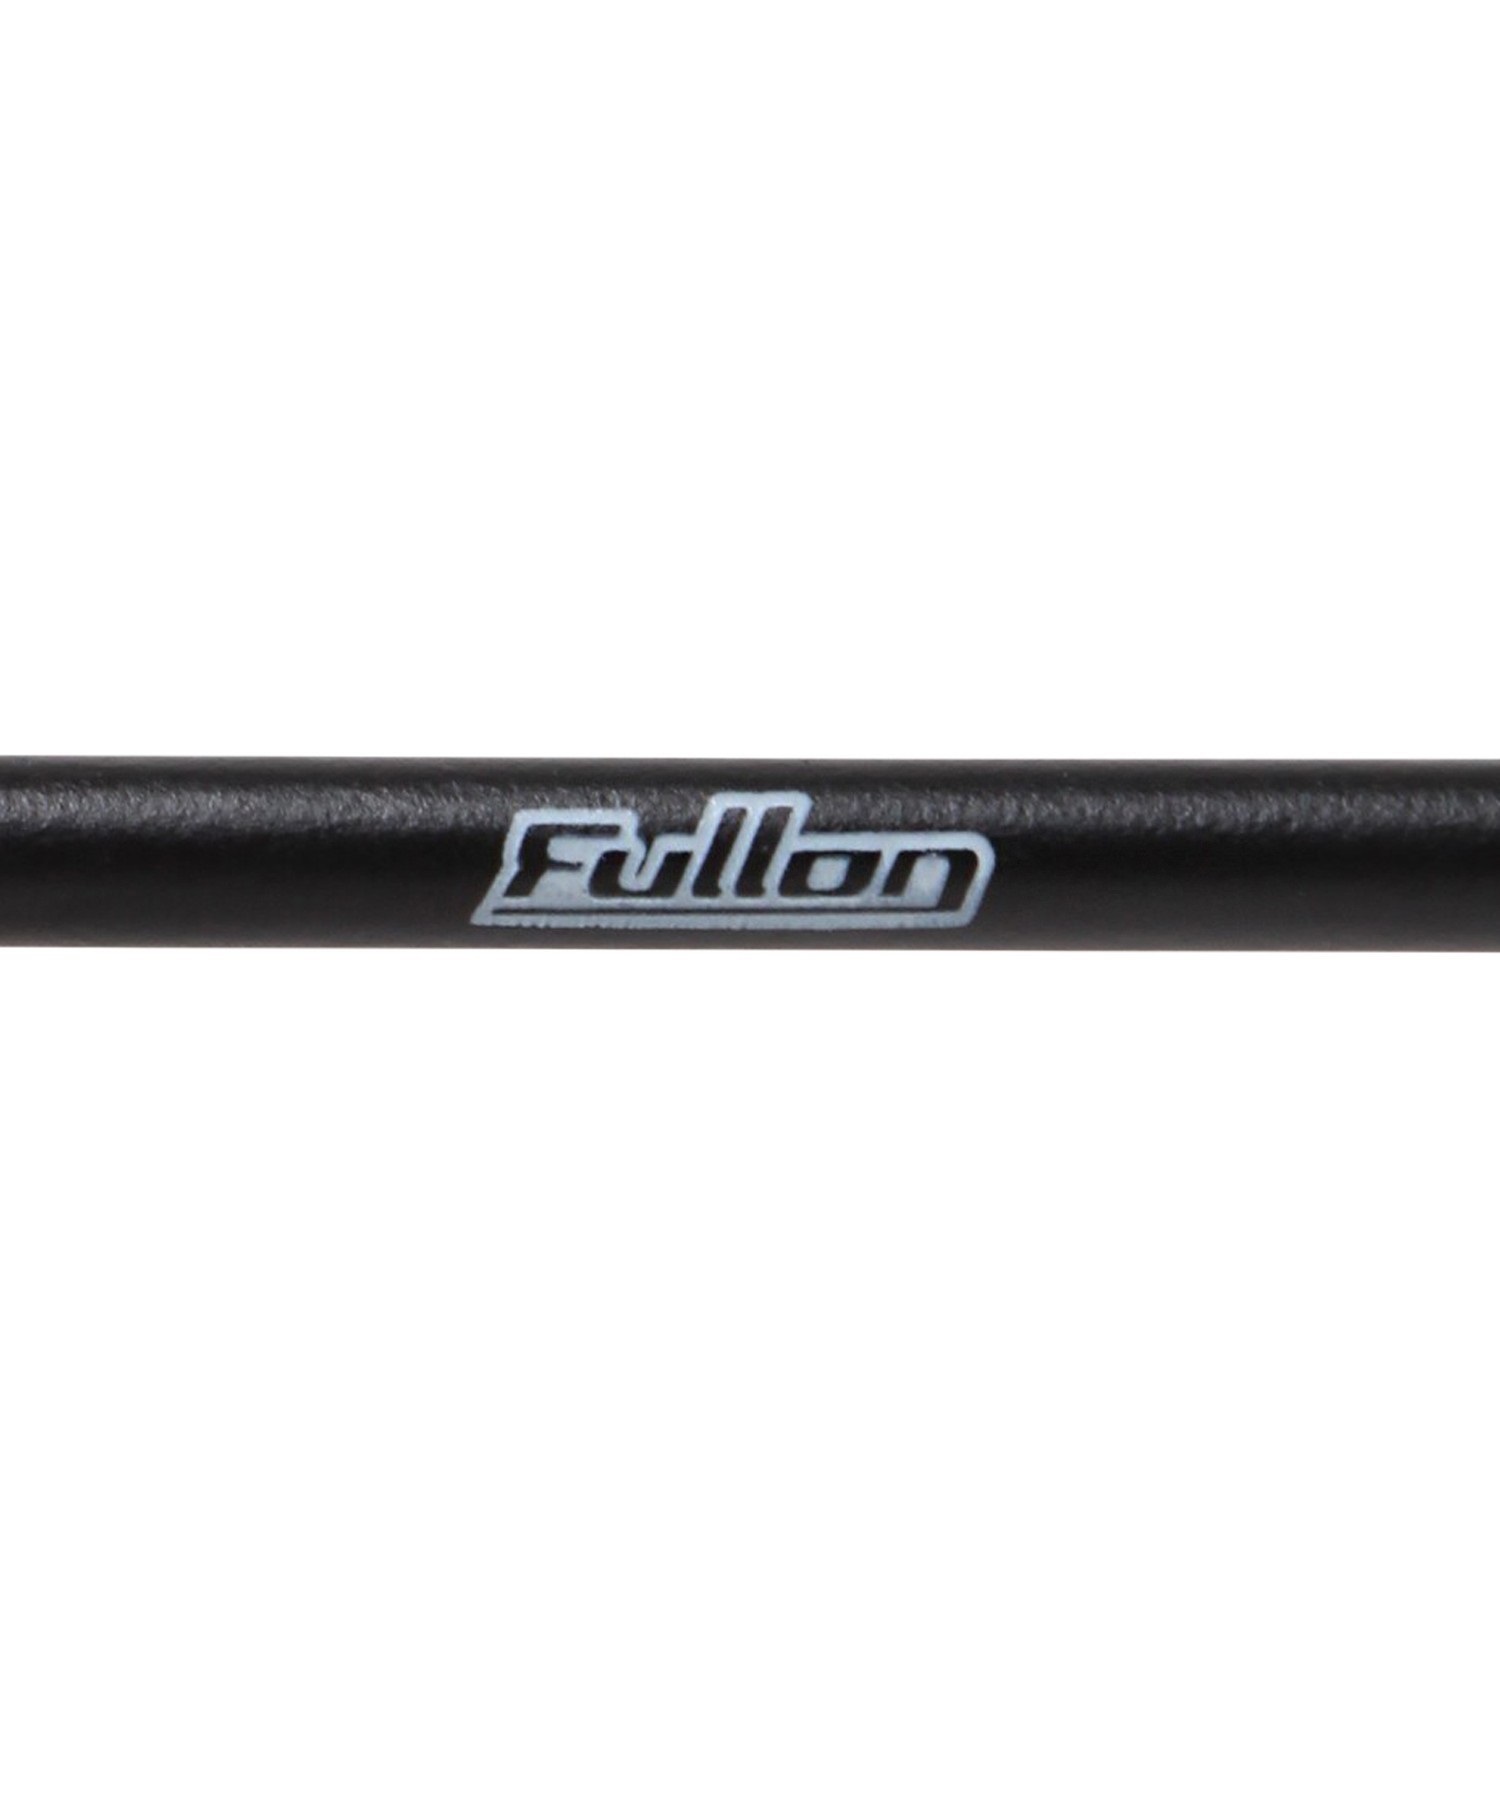 FULLON フローン FBL 075-1 メンズ 眼鏡 メガネ サングラス KK E18(ONECOLOR-F)